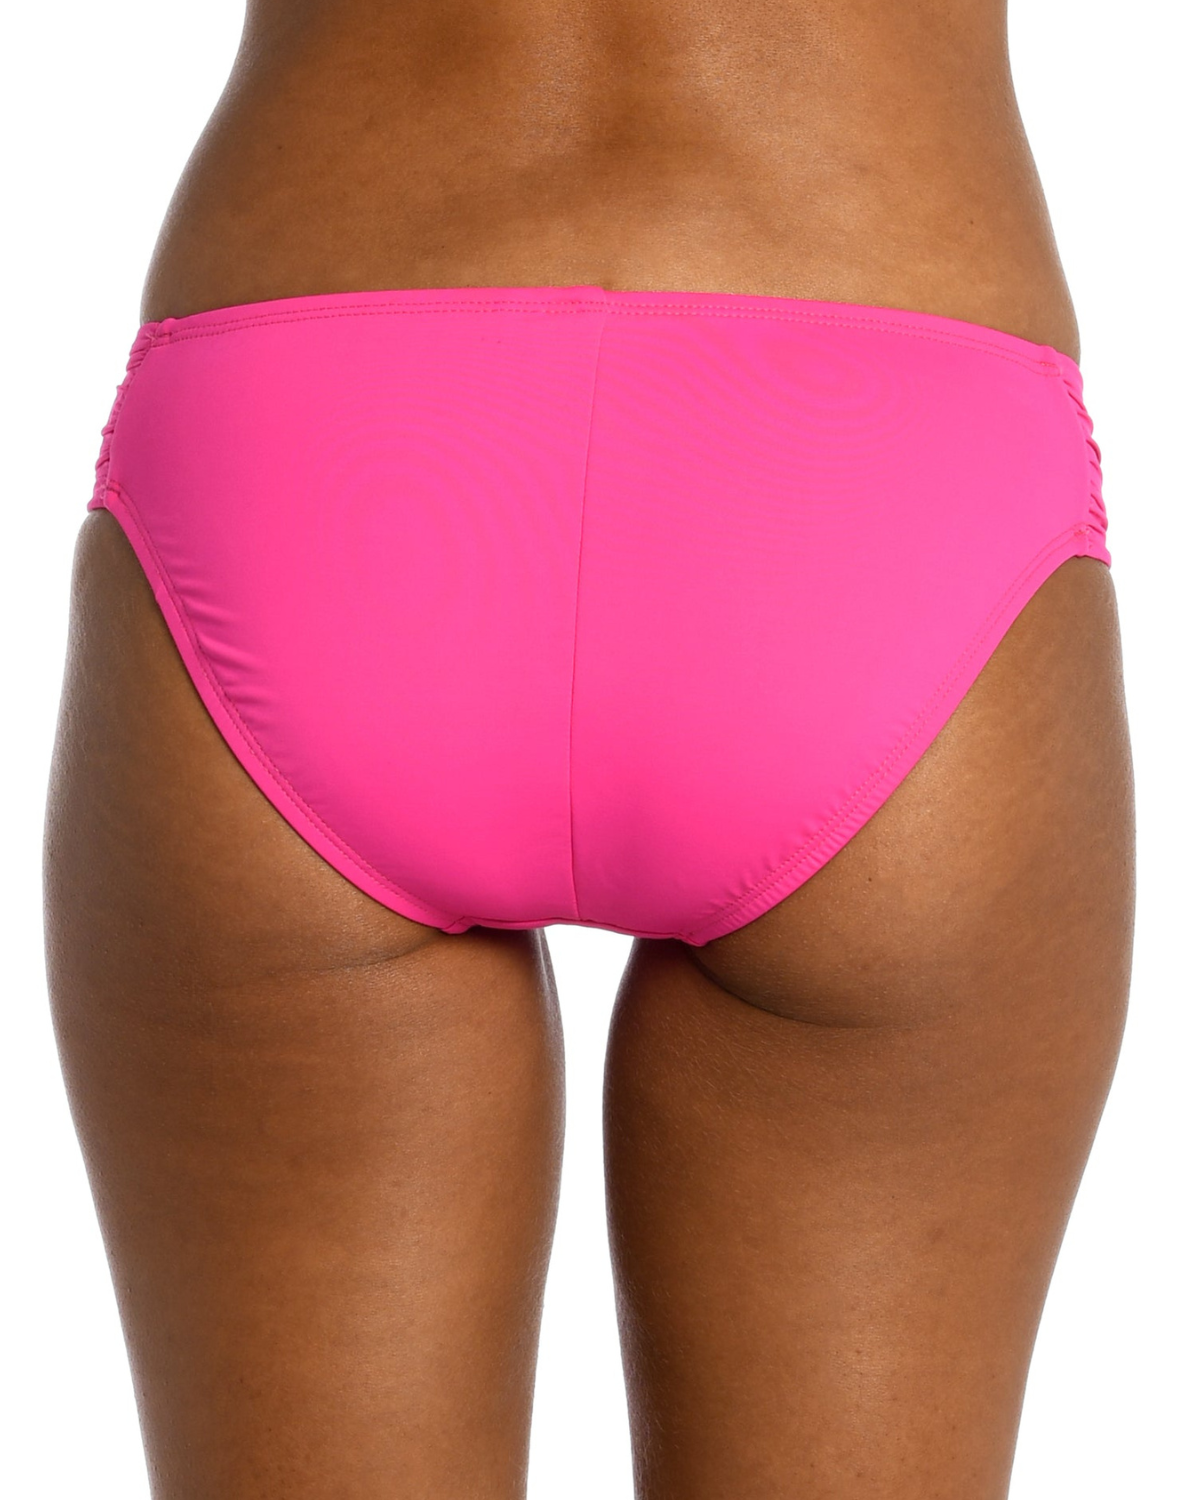 Model wearing a side shirred hipster bikini bottom in pink